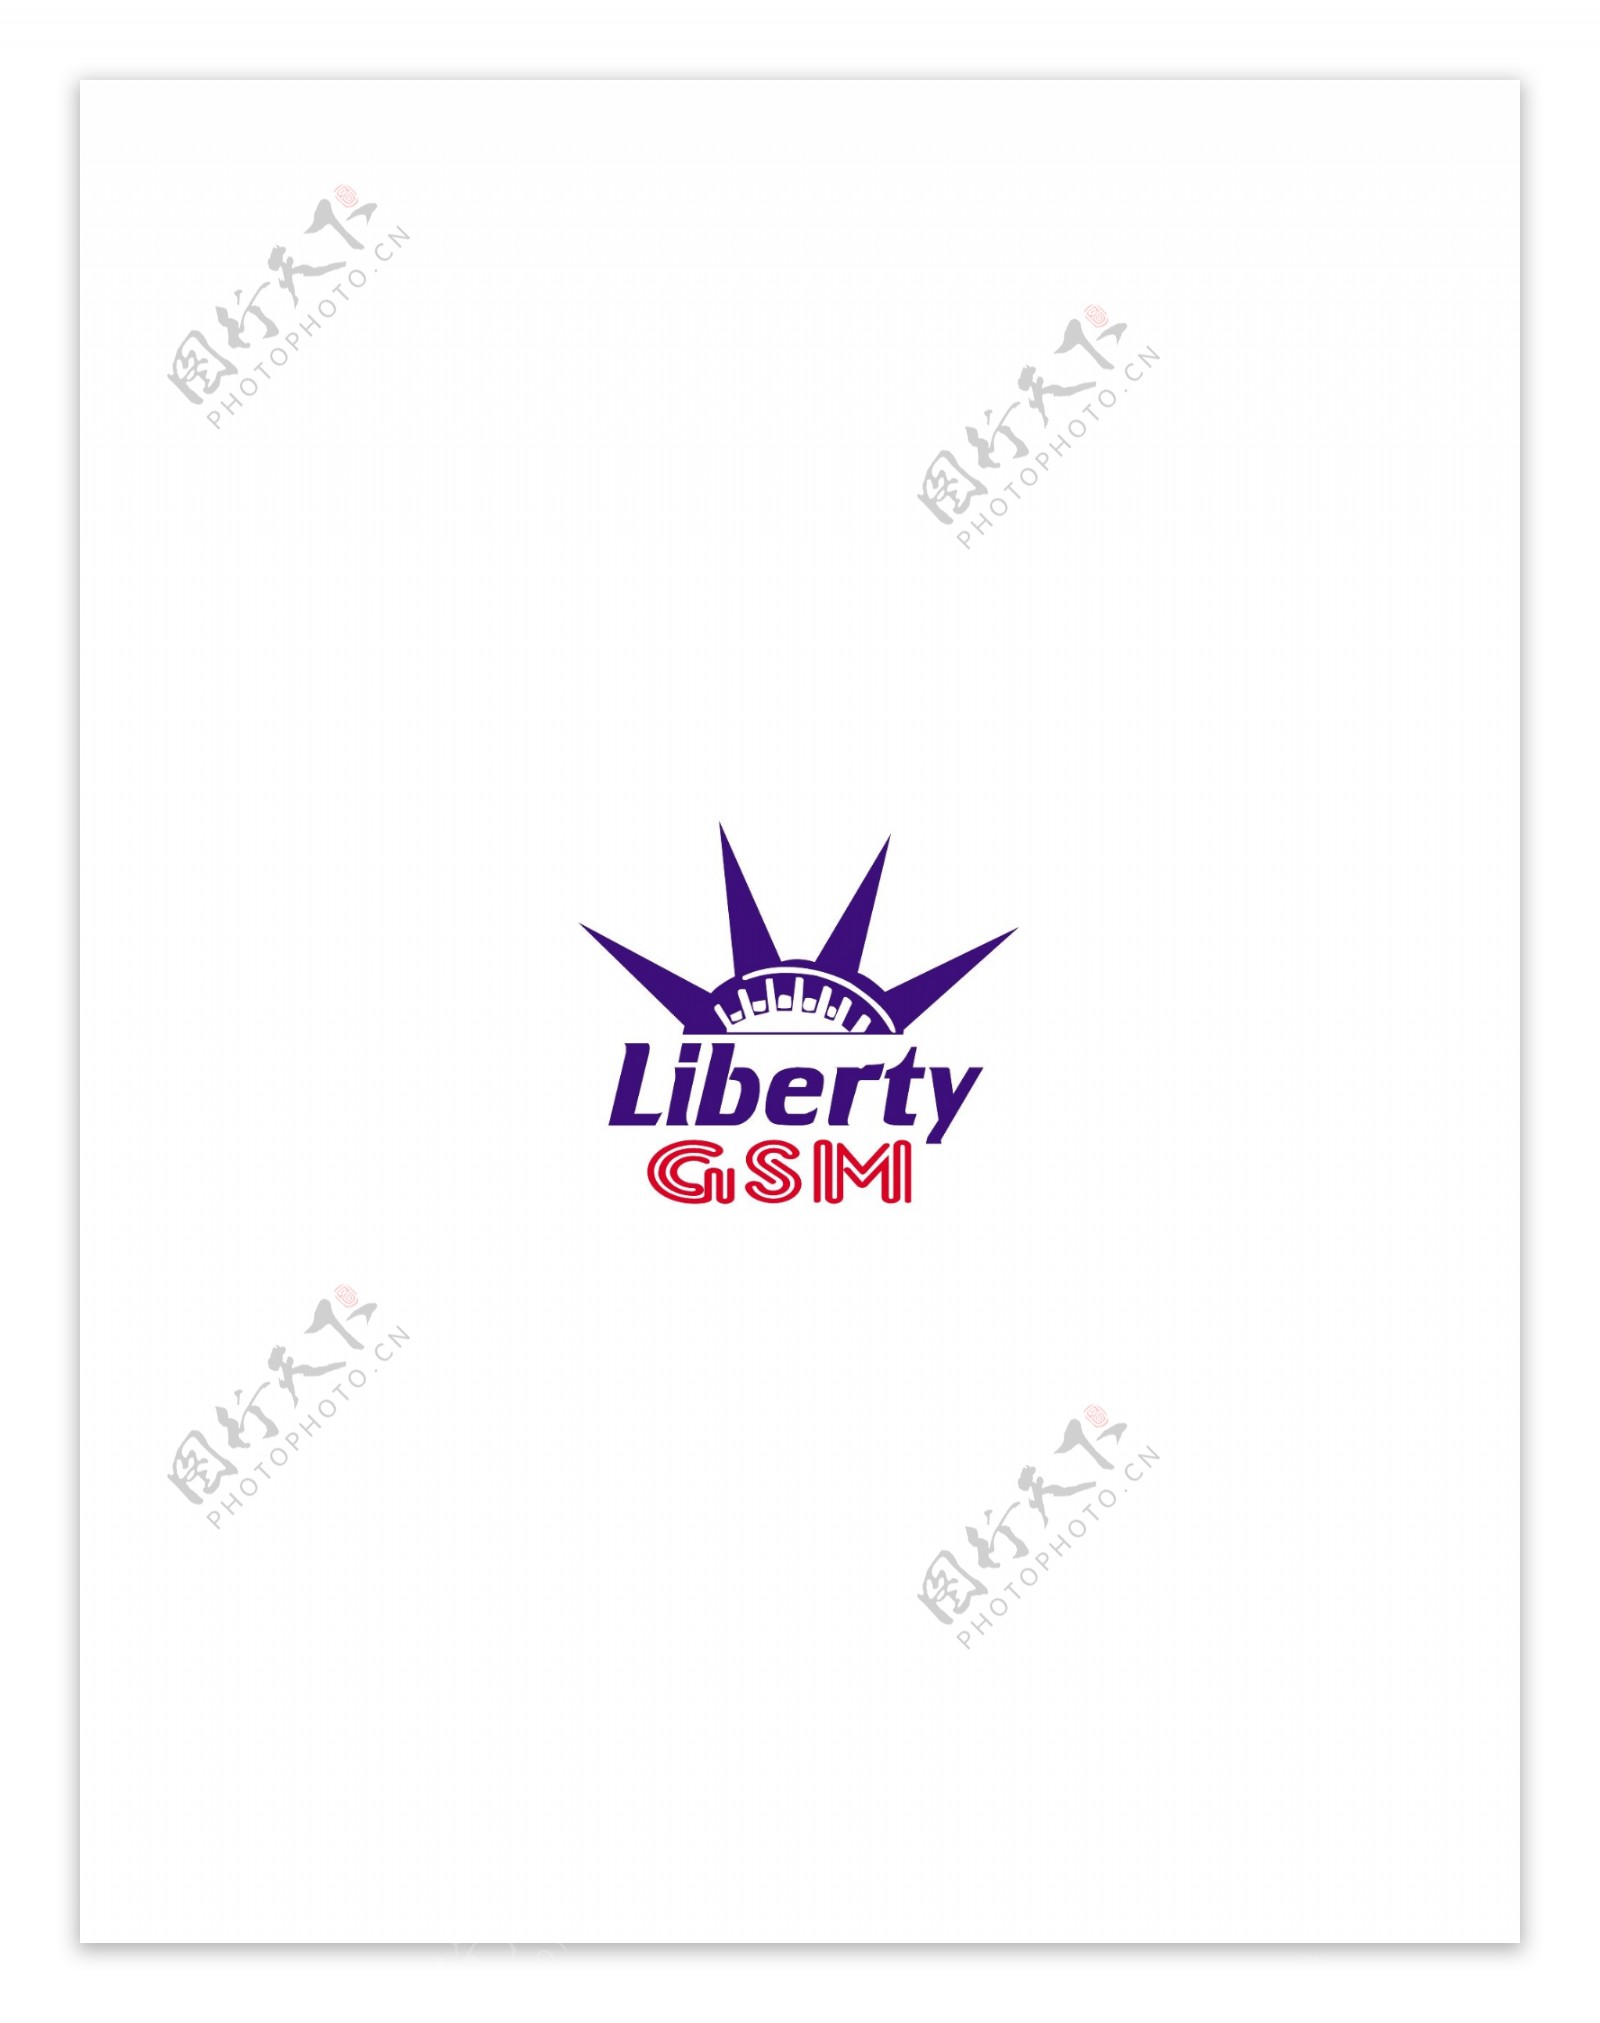 LibertyGSMlogo设计欣赏LibertyGSM下载标志设计欣赏